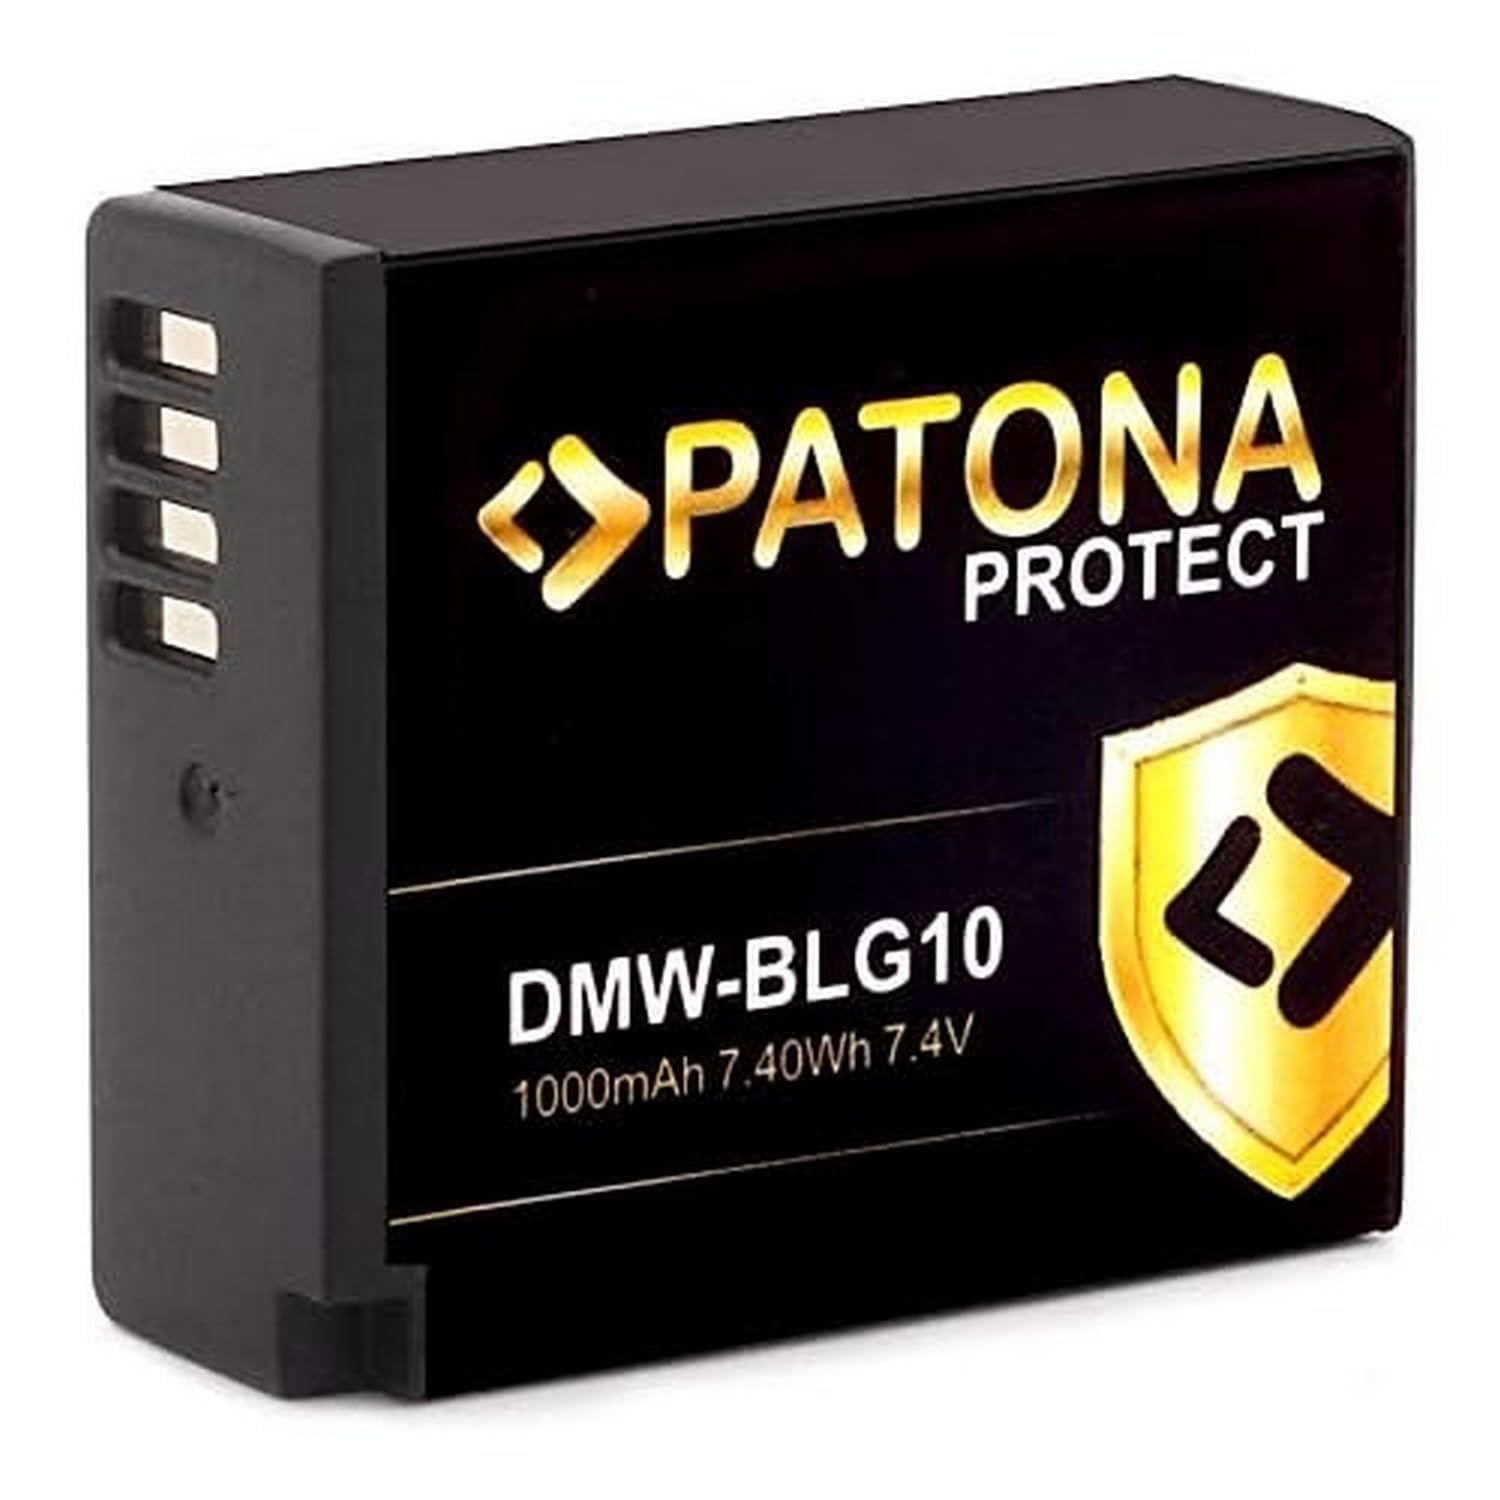 PATONA Protect DMW-BLG10 E Kamera Akku (1000mAh) mit NTC Sensor und V1 Gehäuse